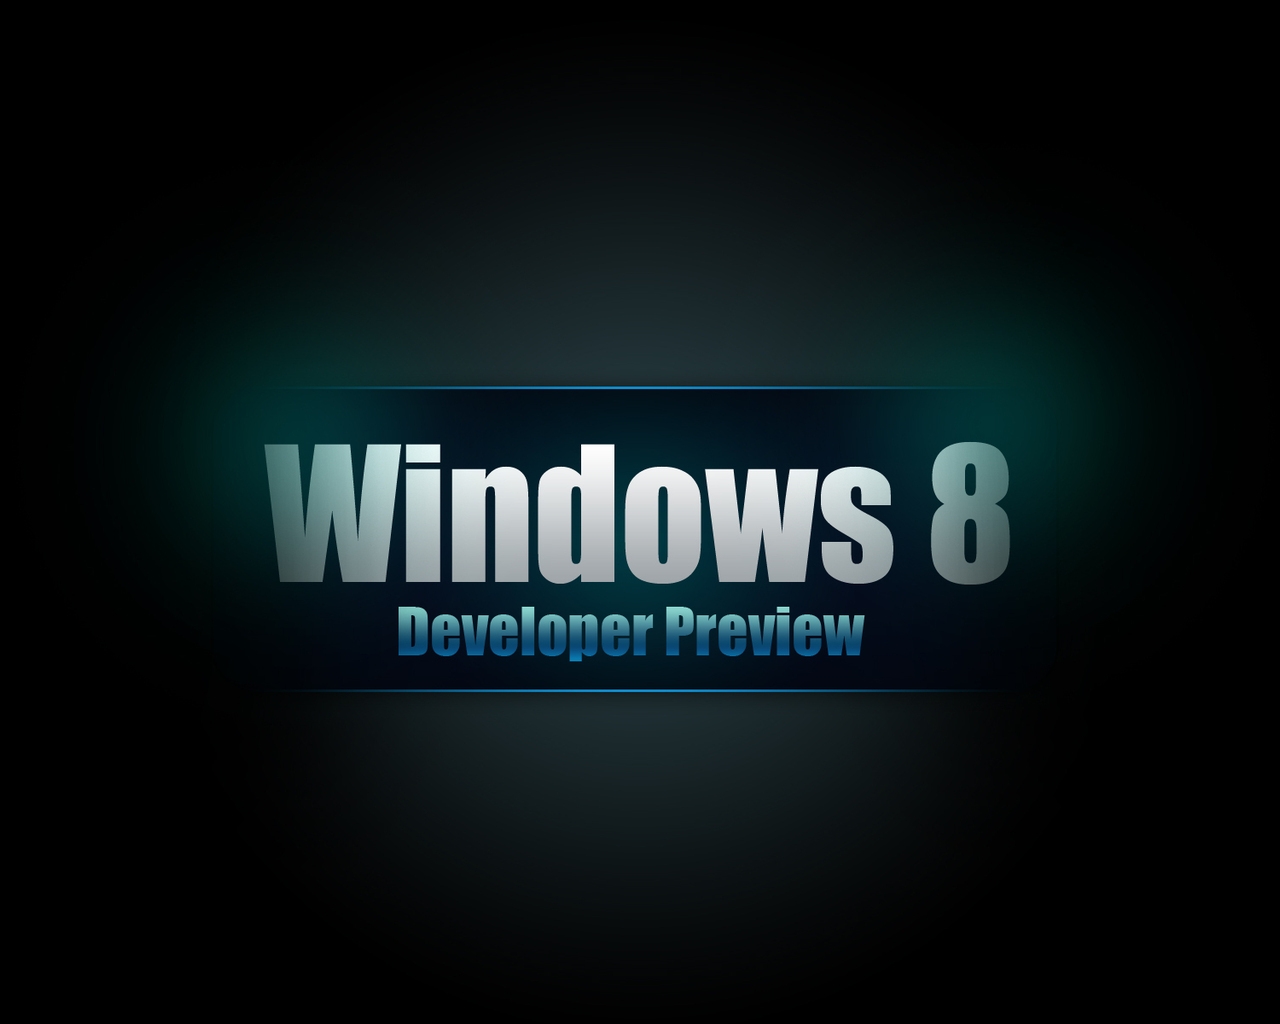 Windows 8 Developer for 1280 x 1024 resolution